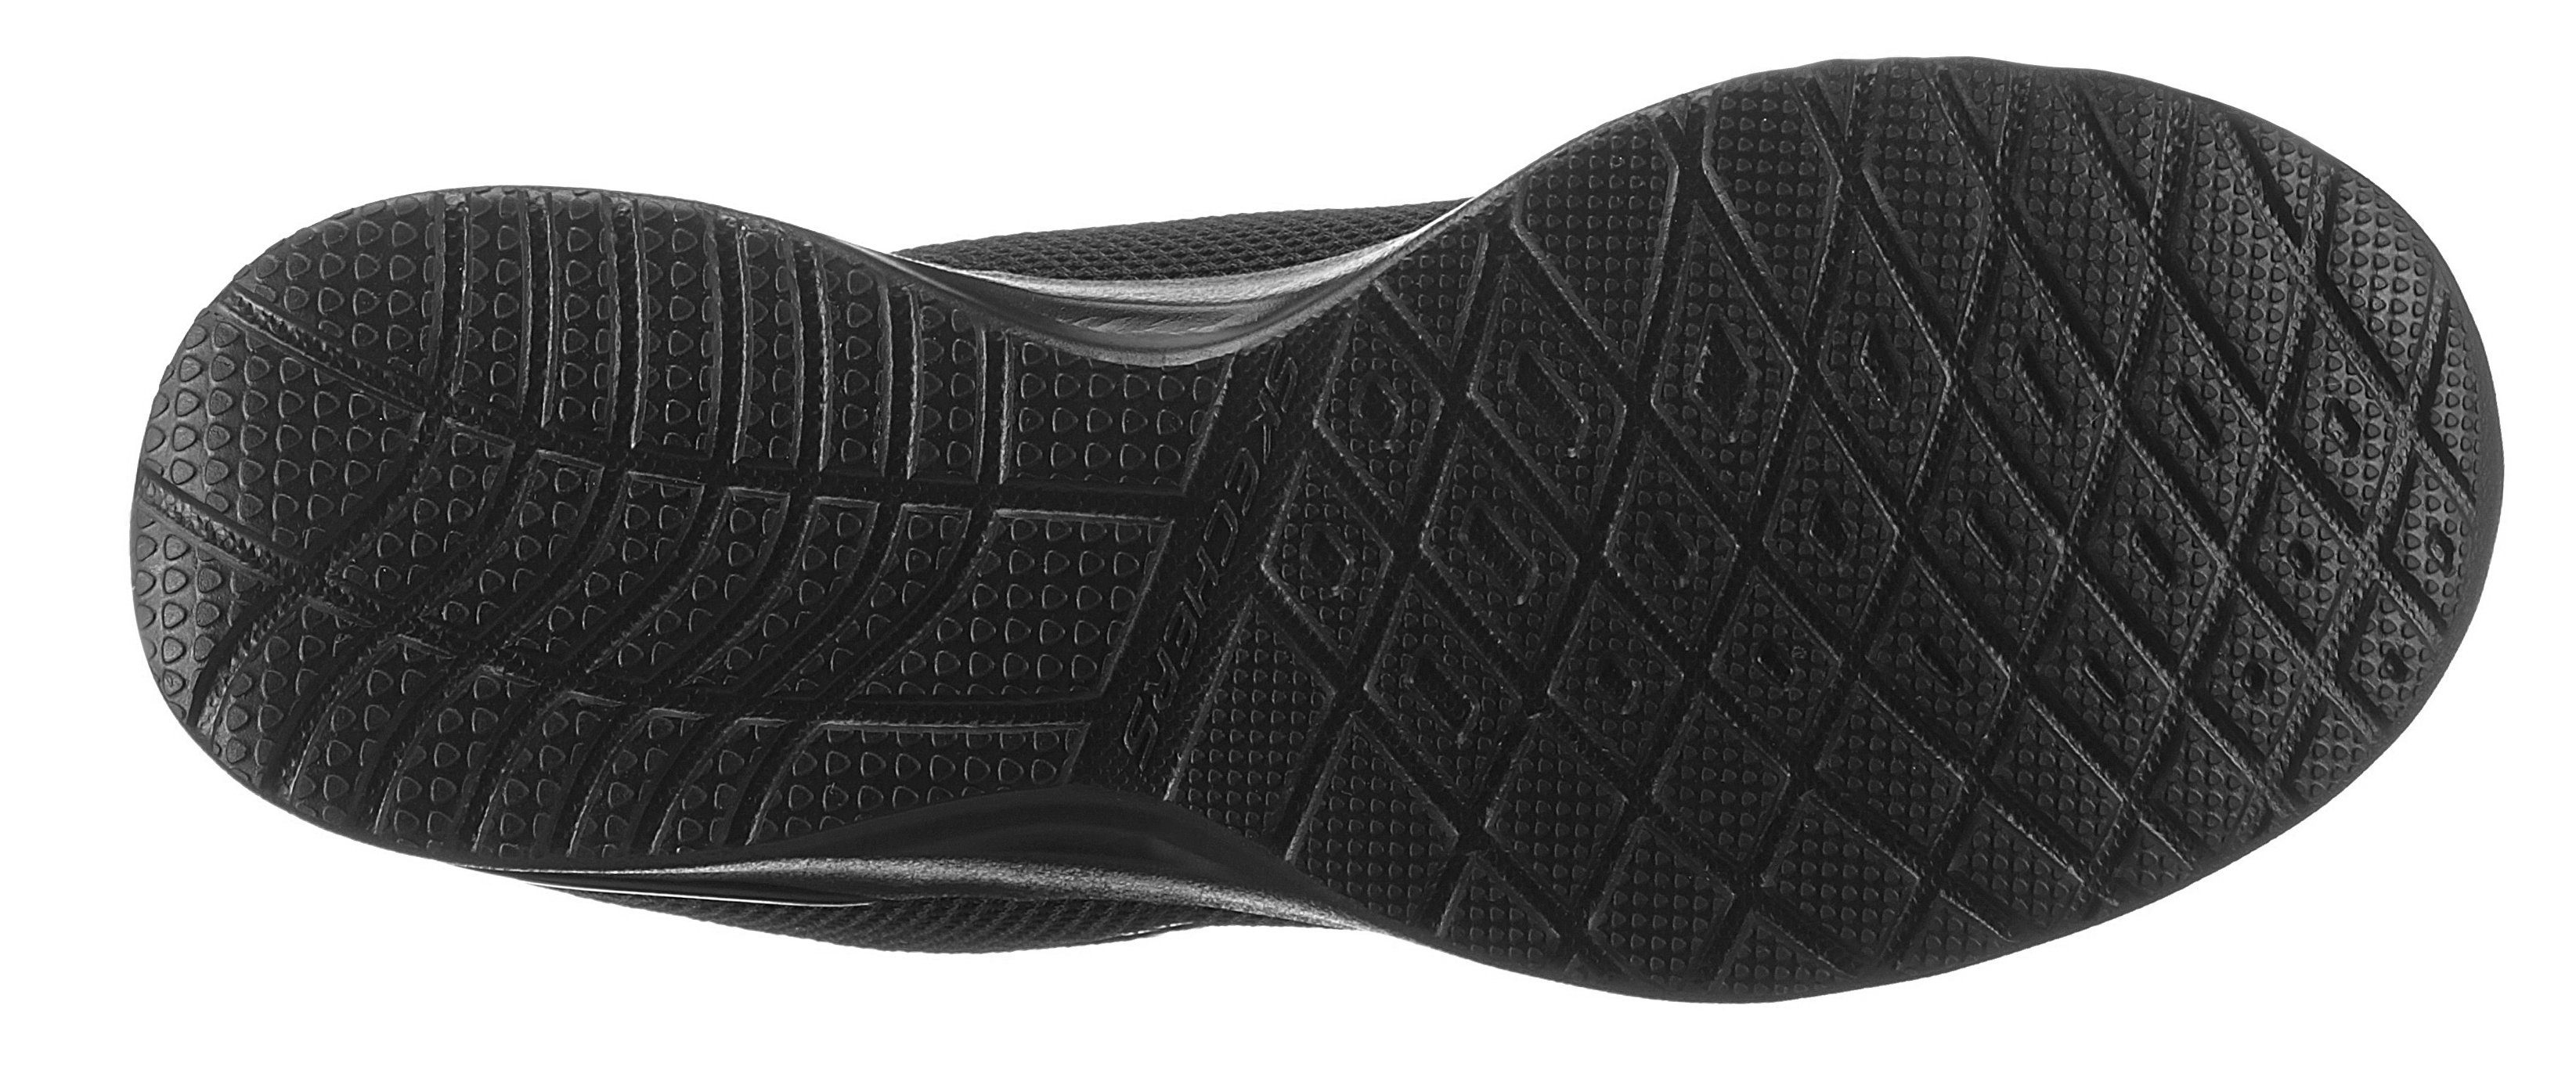 Skechers Skech-Air Dynamight black Metallic-Element Fast an der - Brake mit Sneaker Ferse